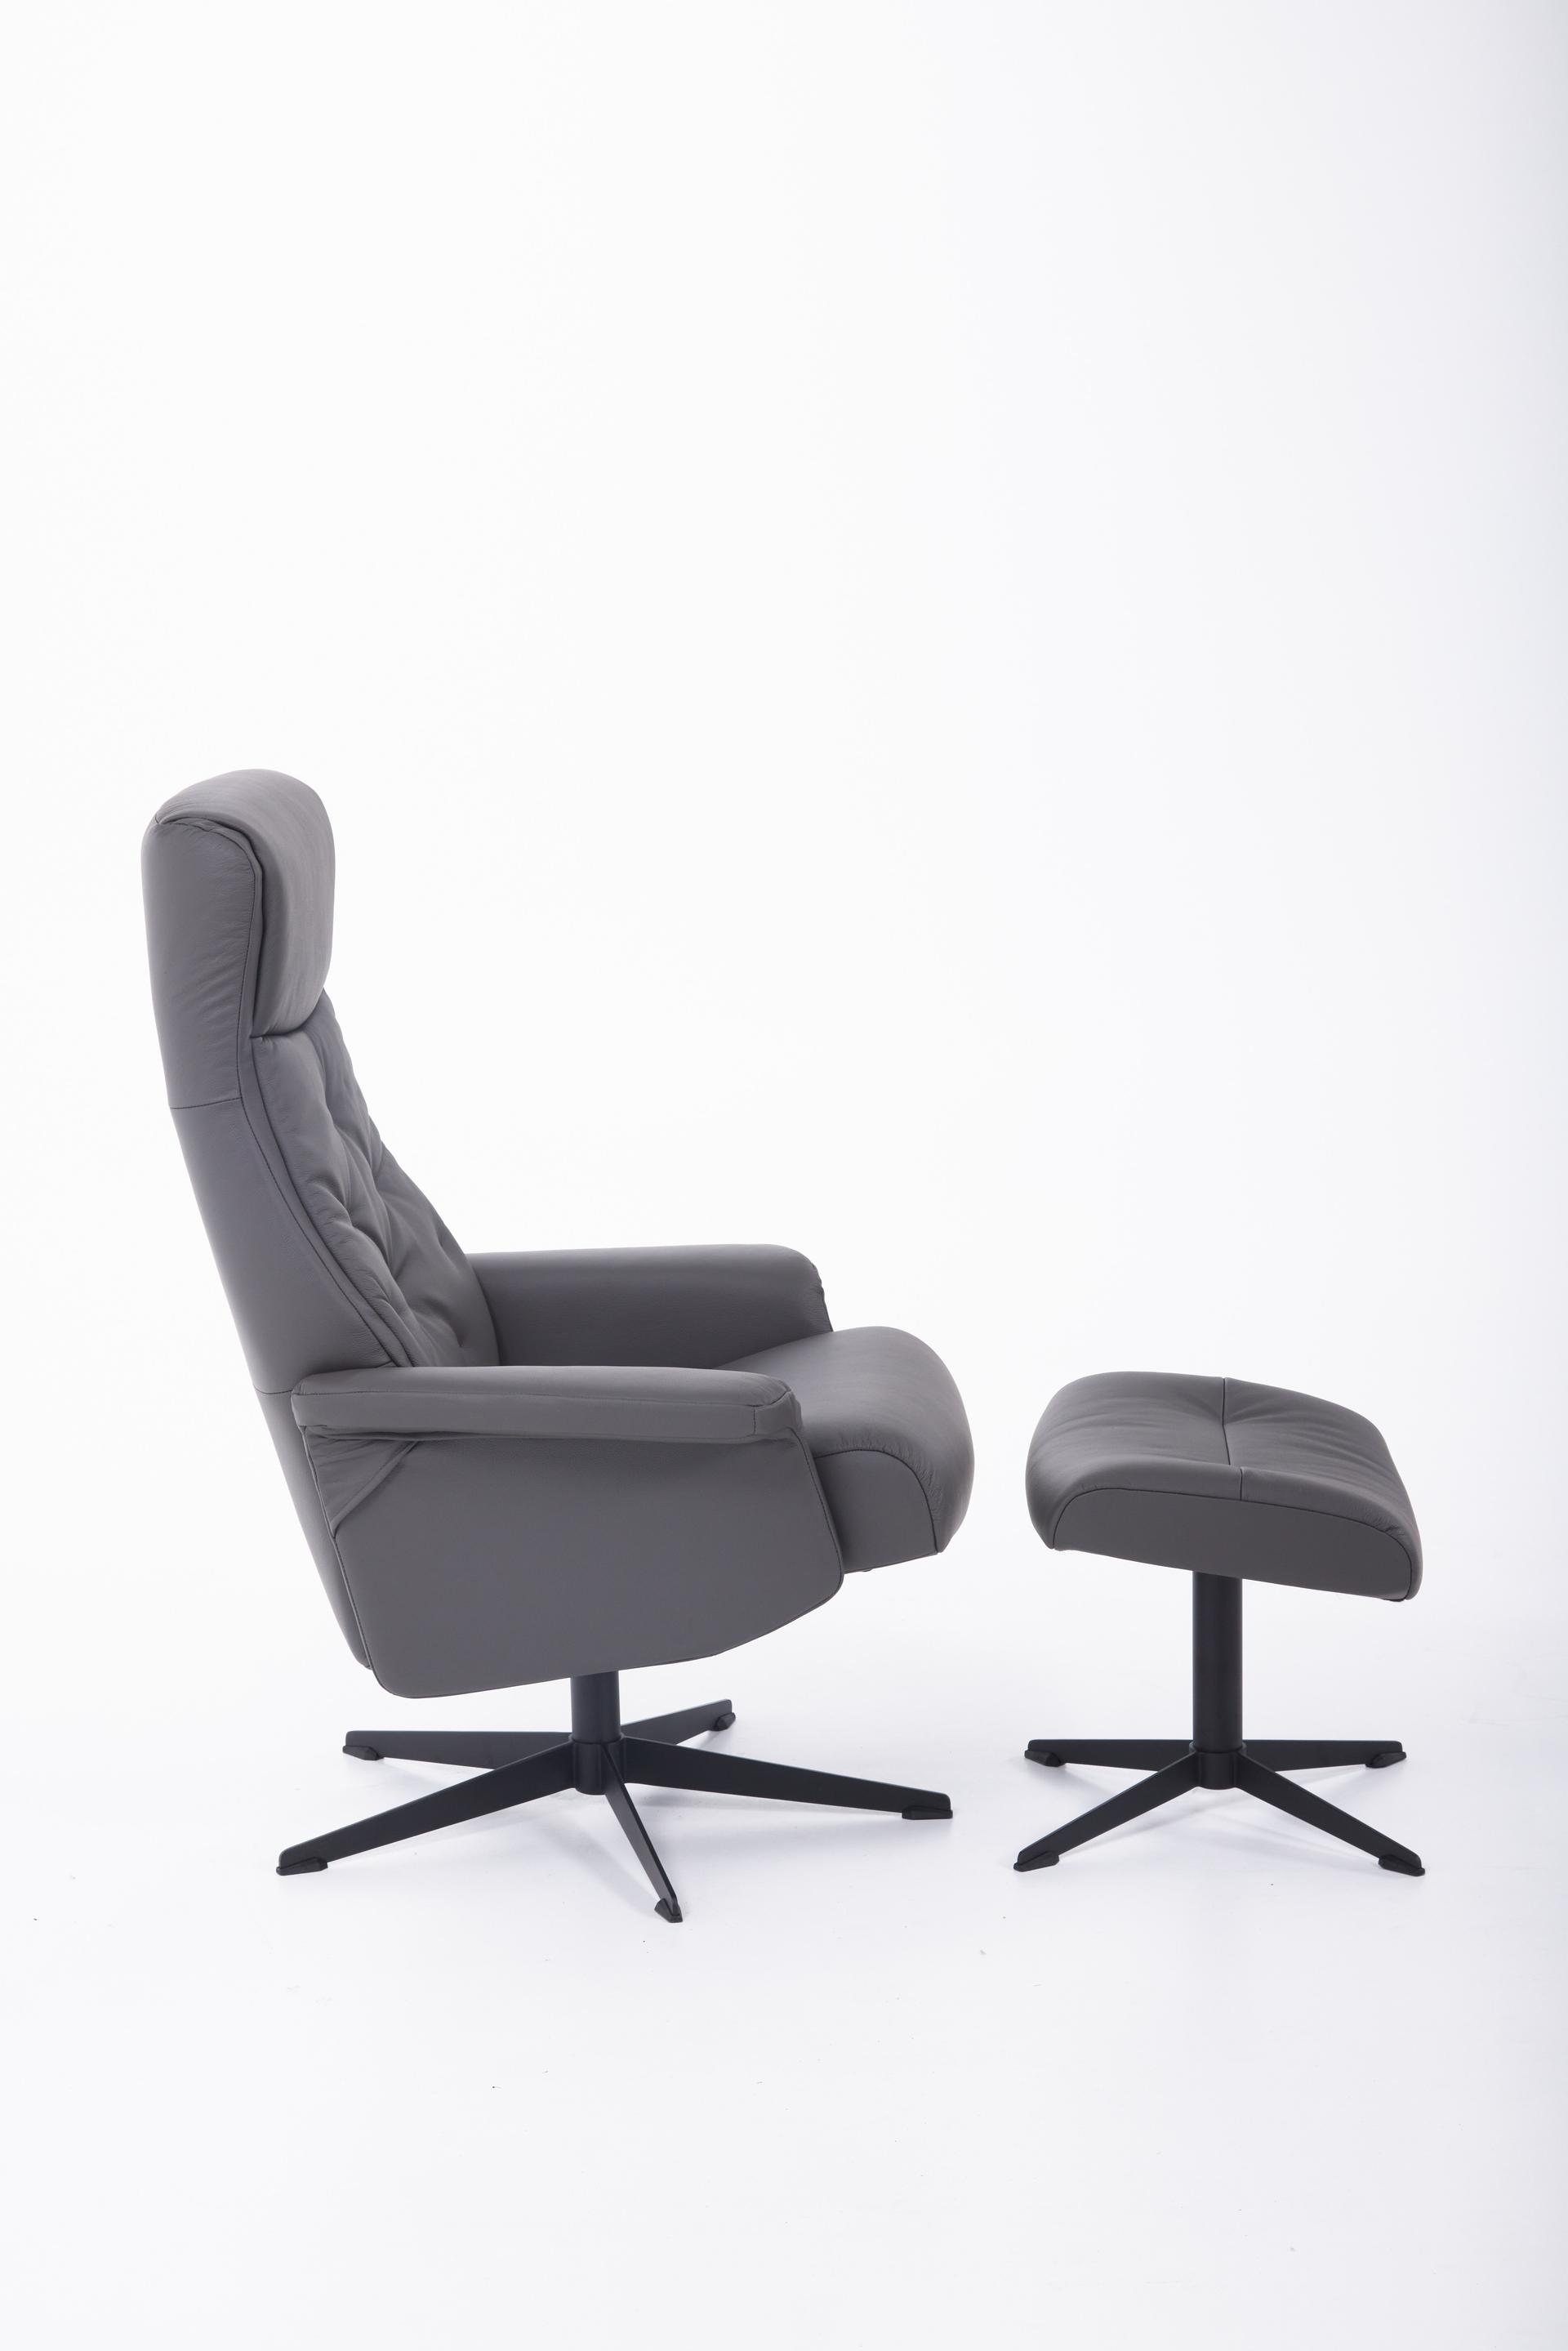 Ekornes Scandi 1120 Chair Prime Grey